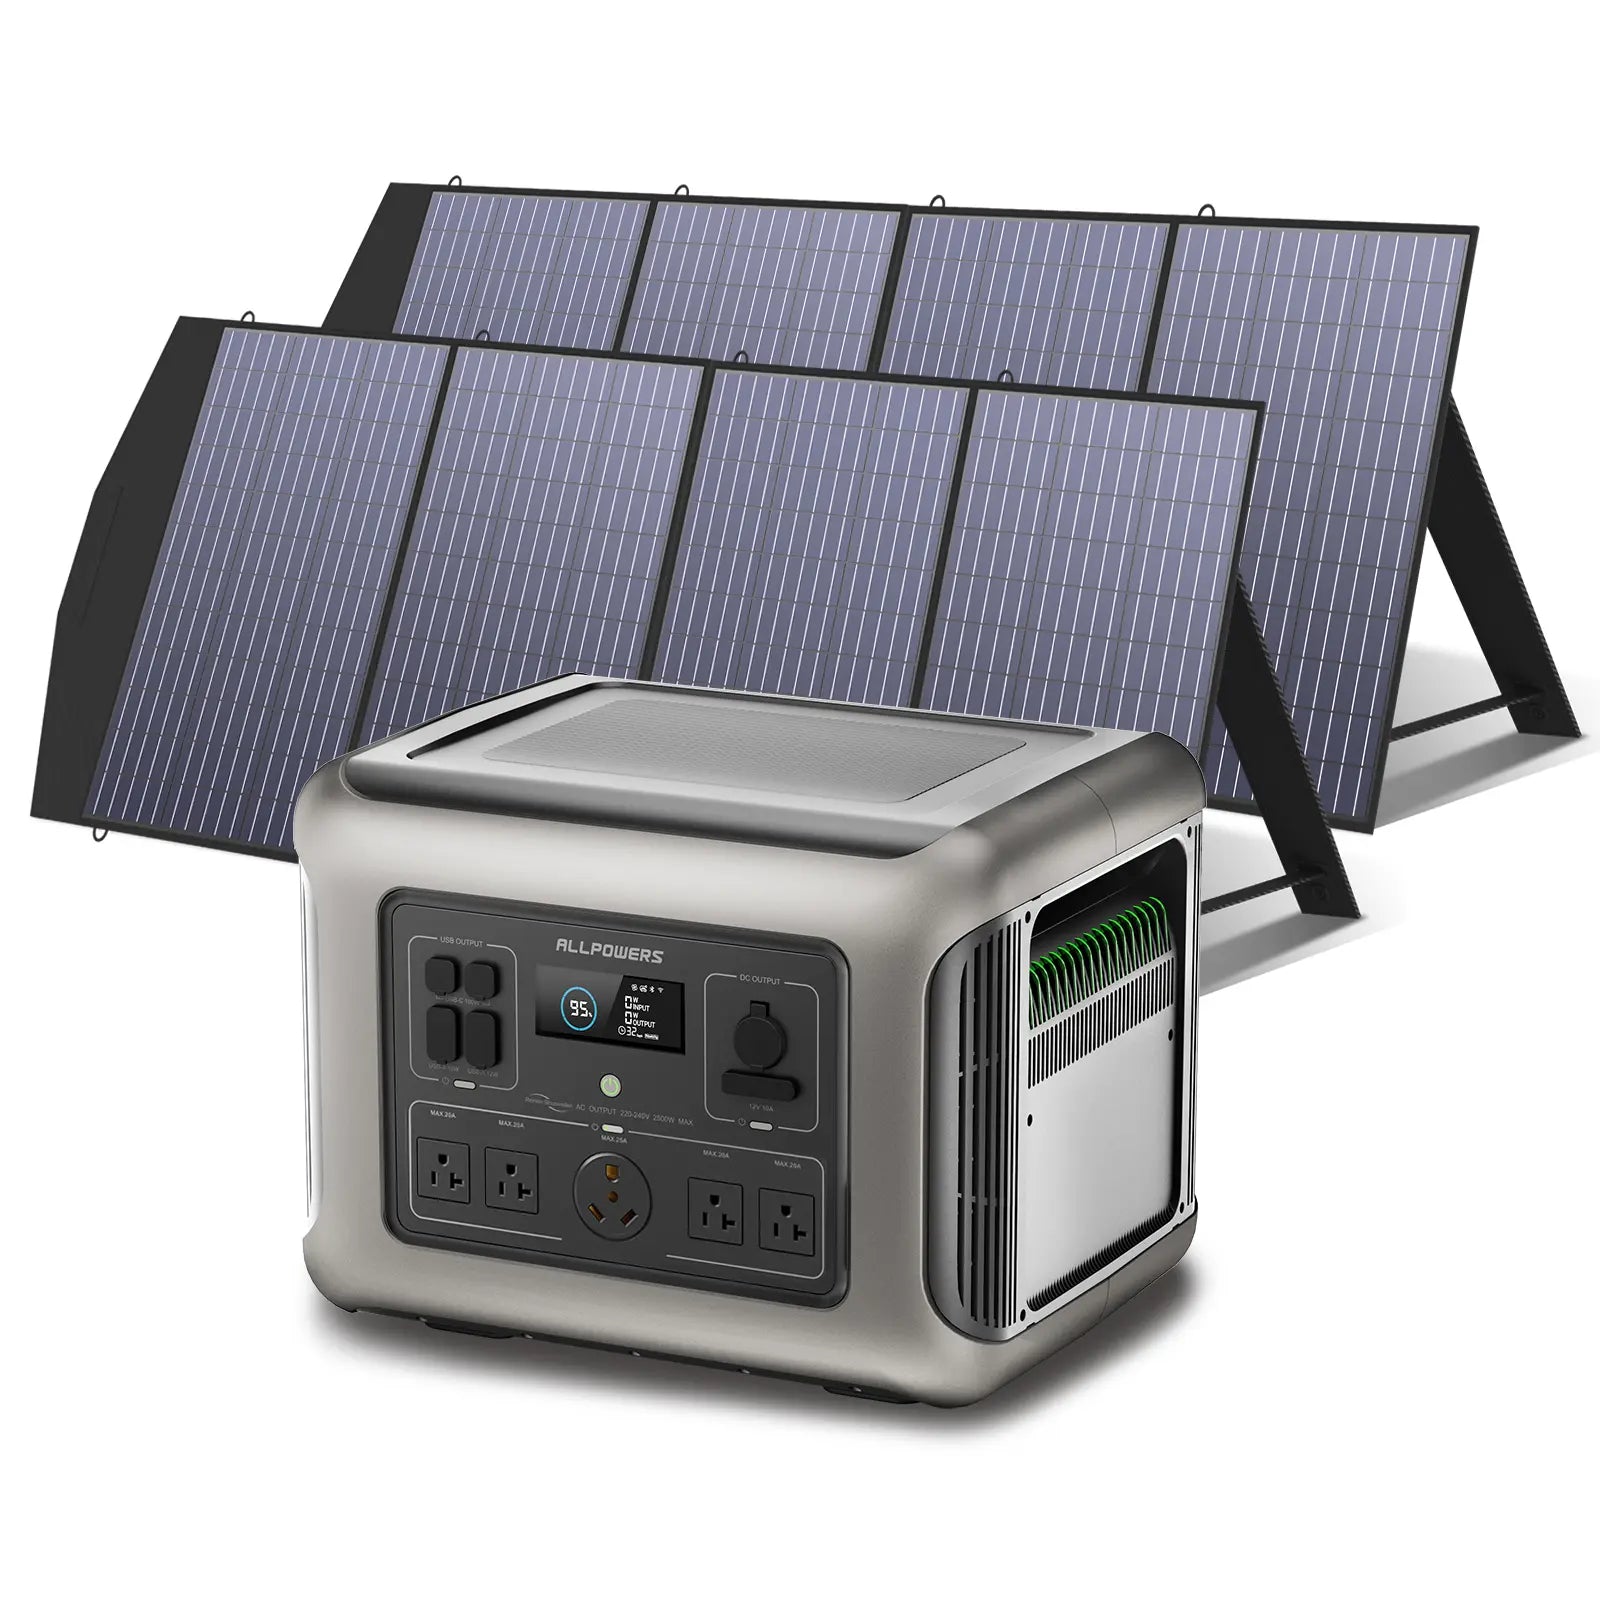 ALLPOWERS Solar Generator Kit 2500W (R2500 + 2 x SP033 200W Solar Panel)